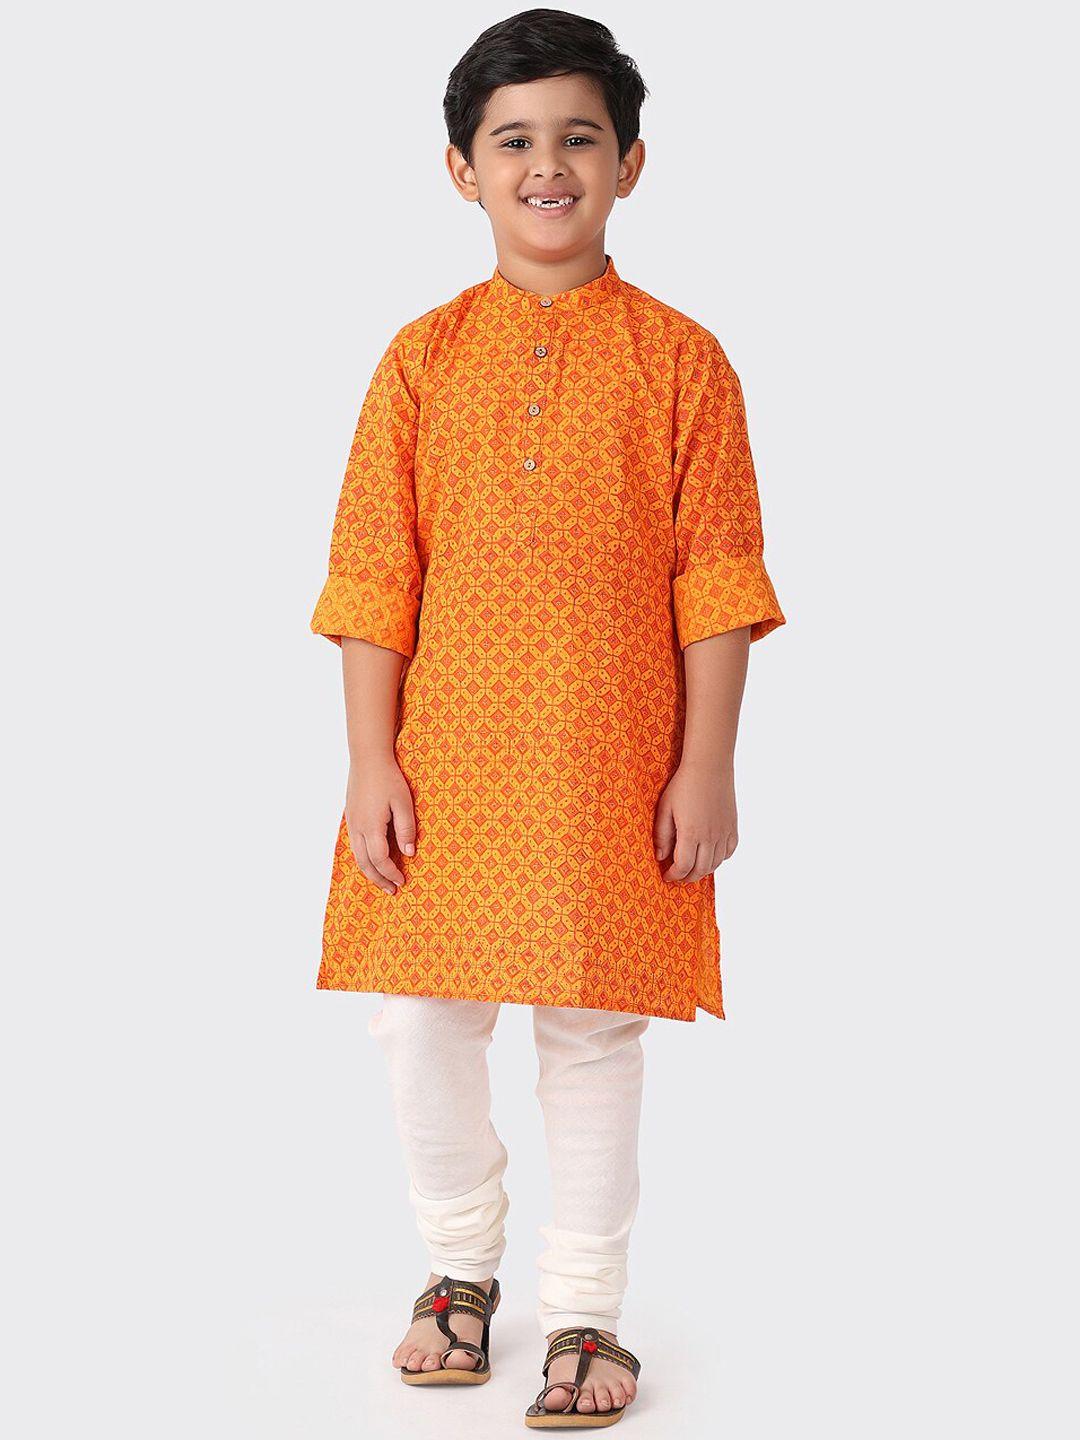 fabindia boys orange & yellow ethnic motifs printed cotton kurta